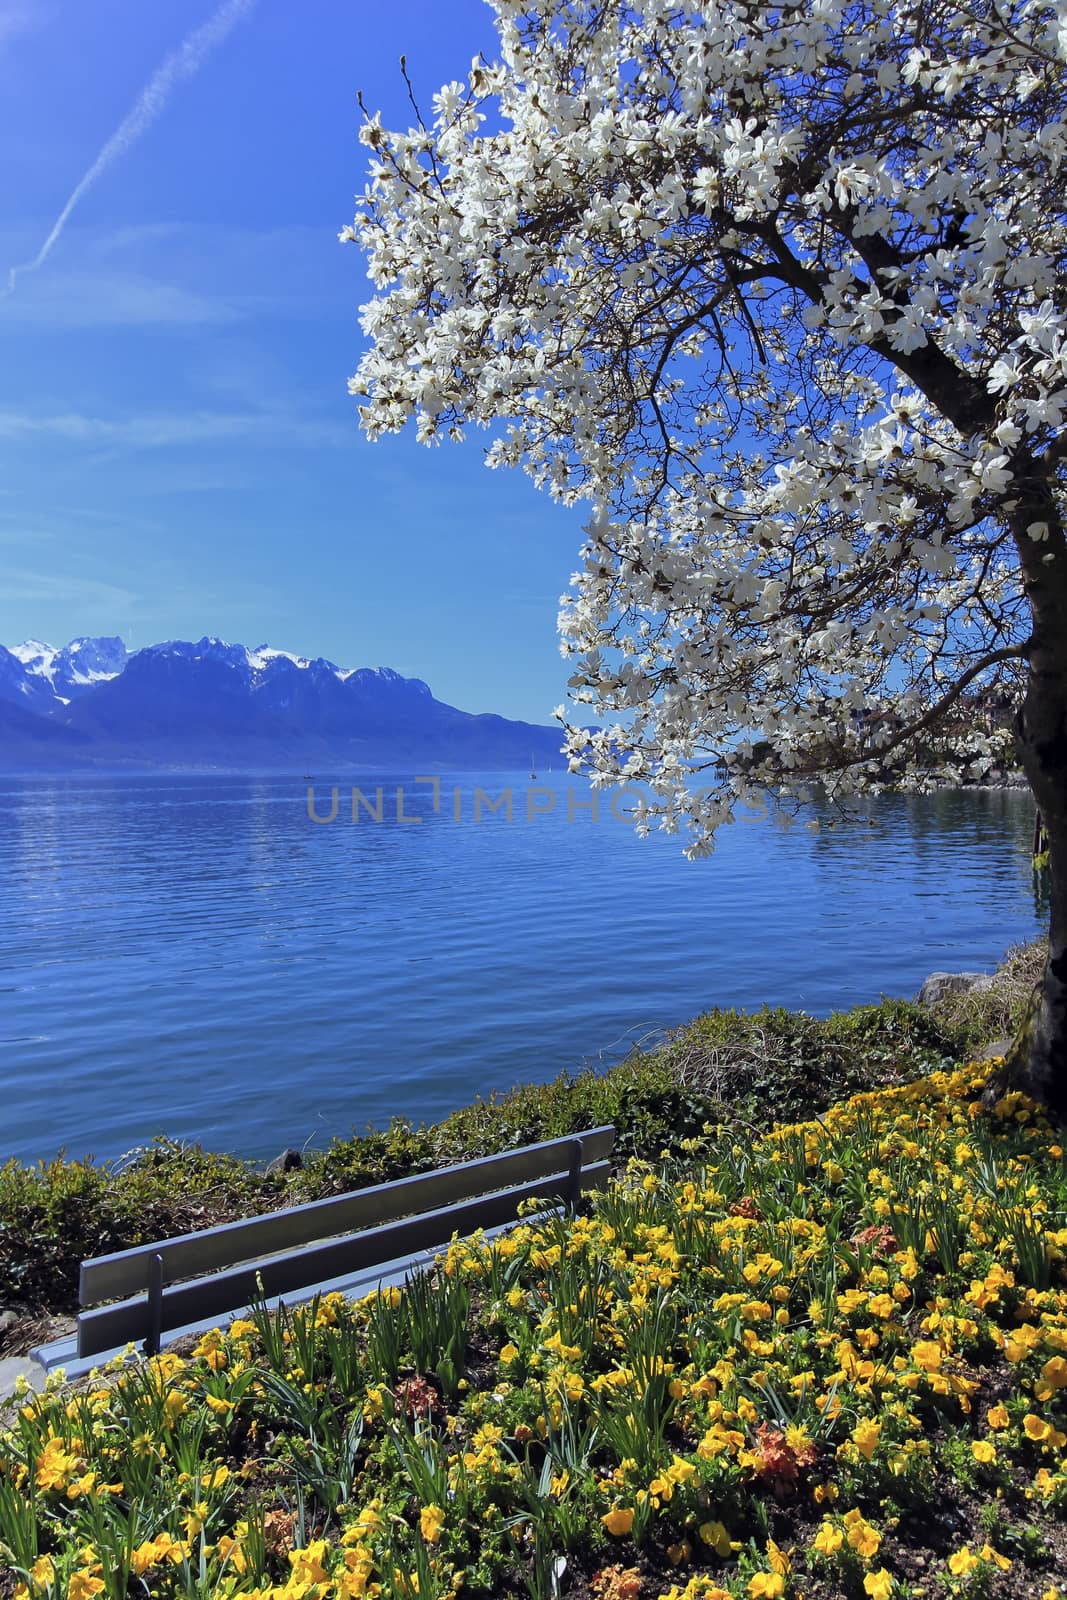 Springtime at Geneva or Leman lake, Montreux, Switzerland by Elenaphotos21